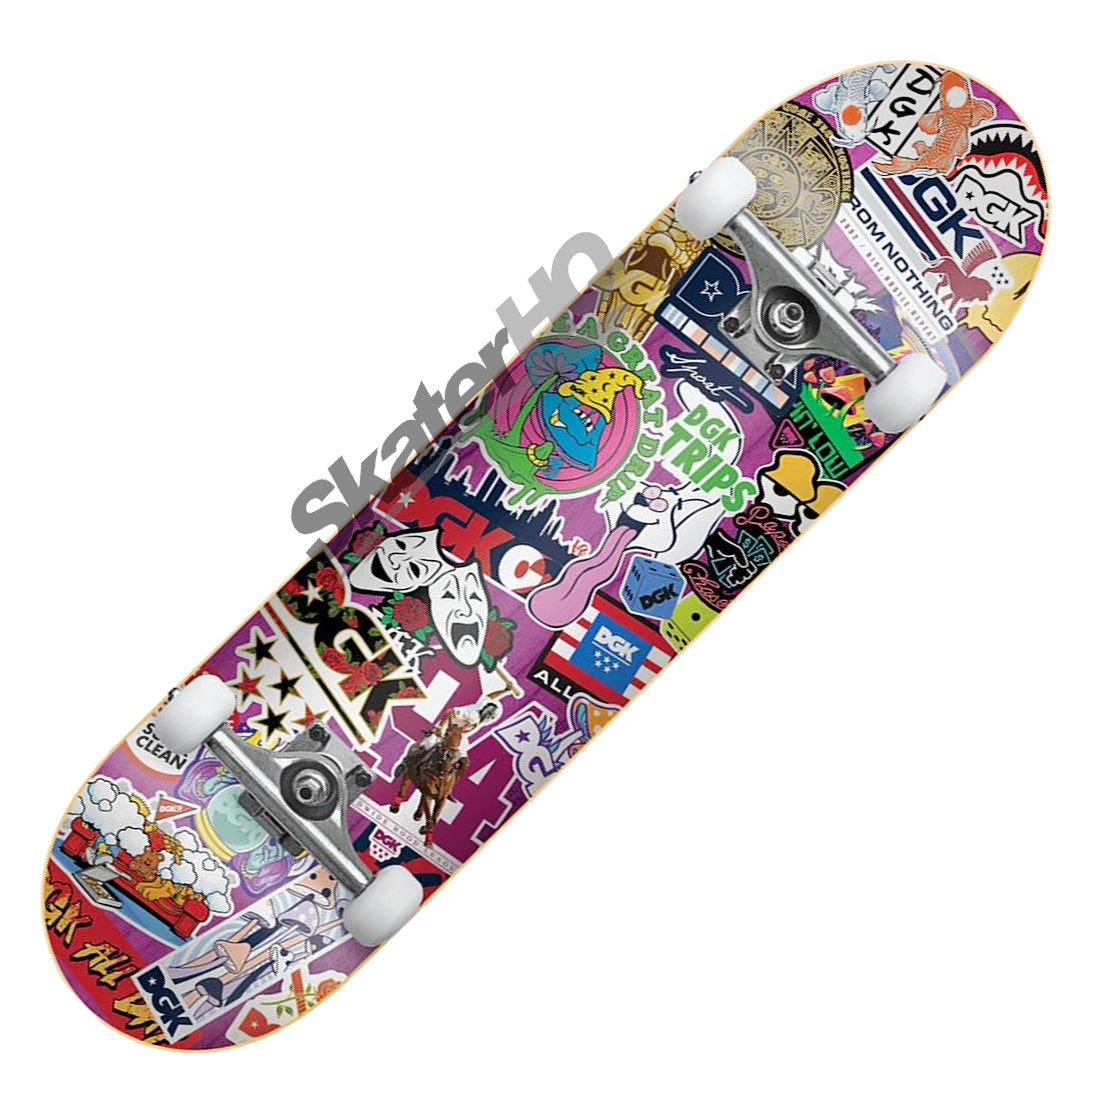 DGK Stix 7.25 Complete - Pink Skateboard Completes Modern Street